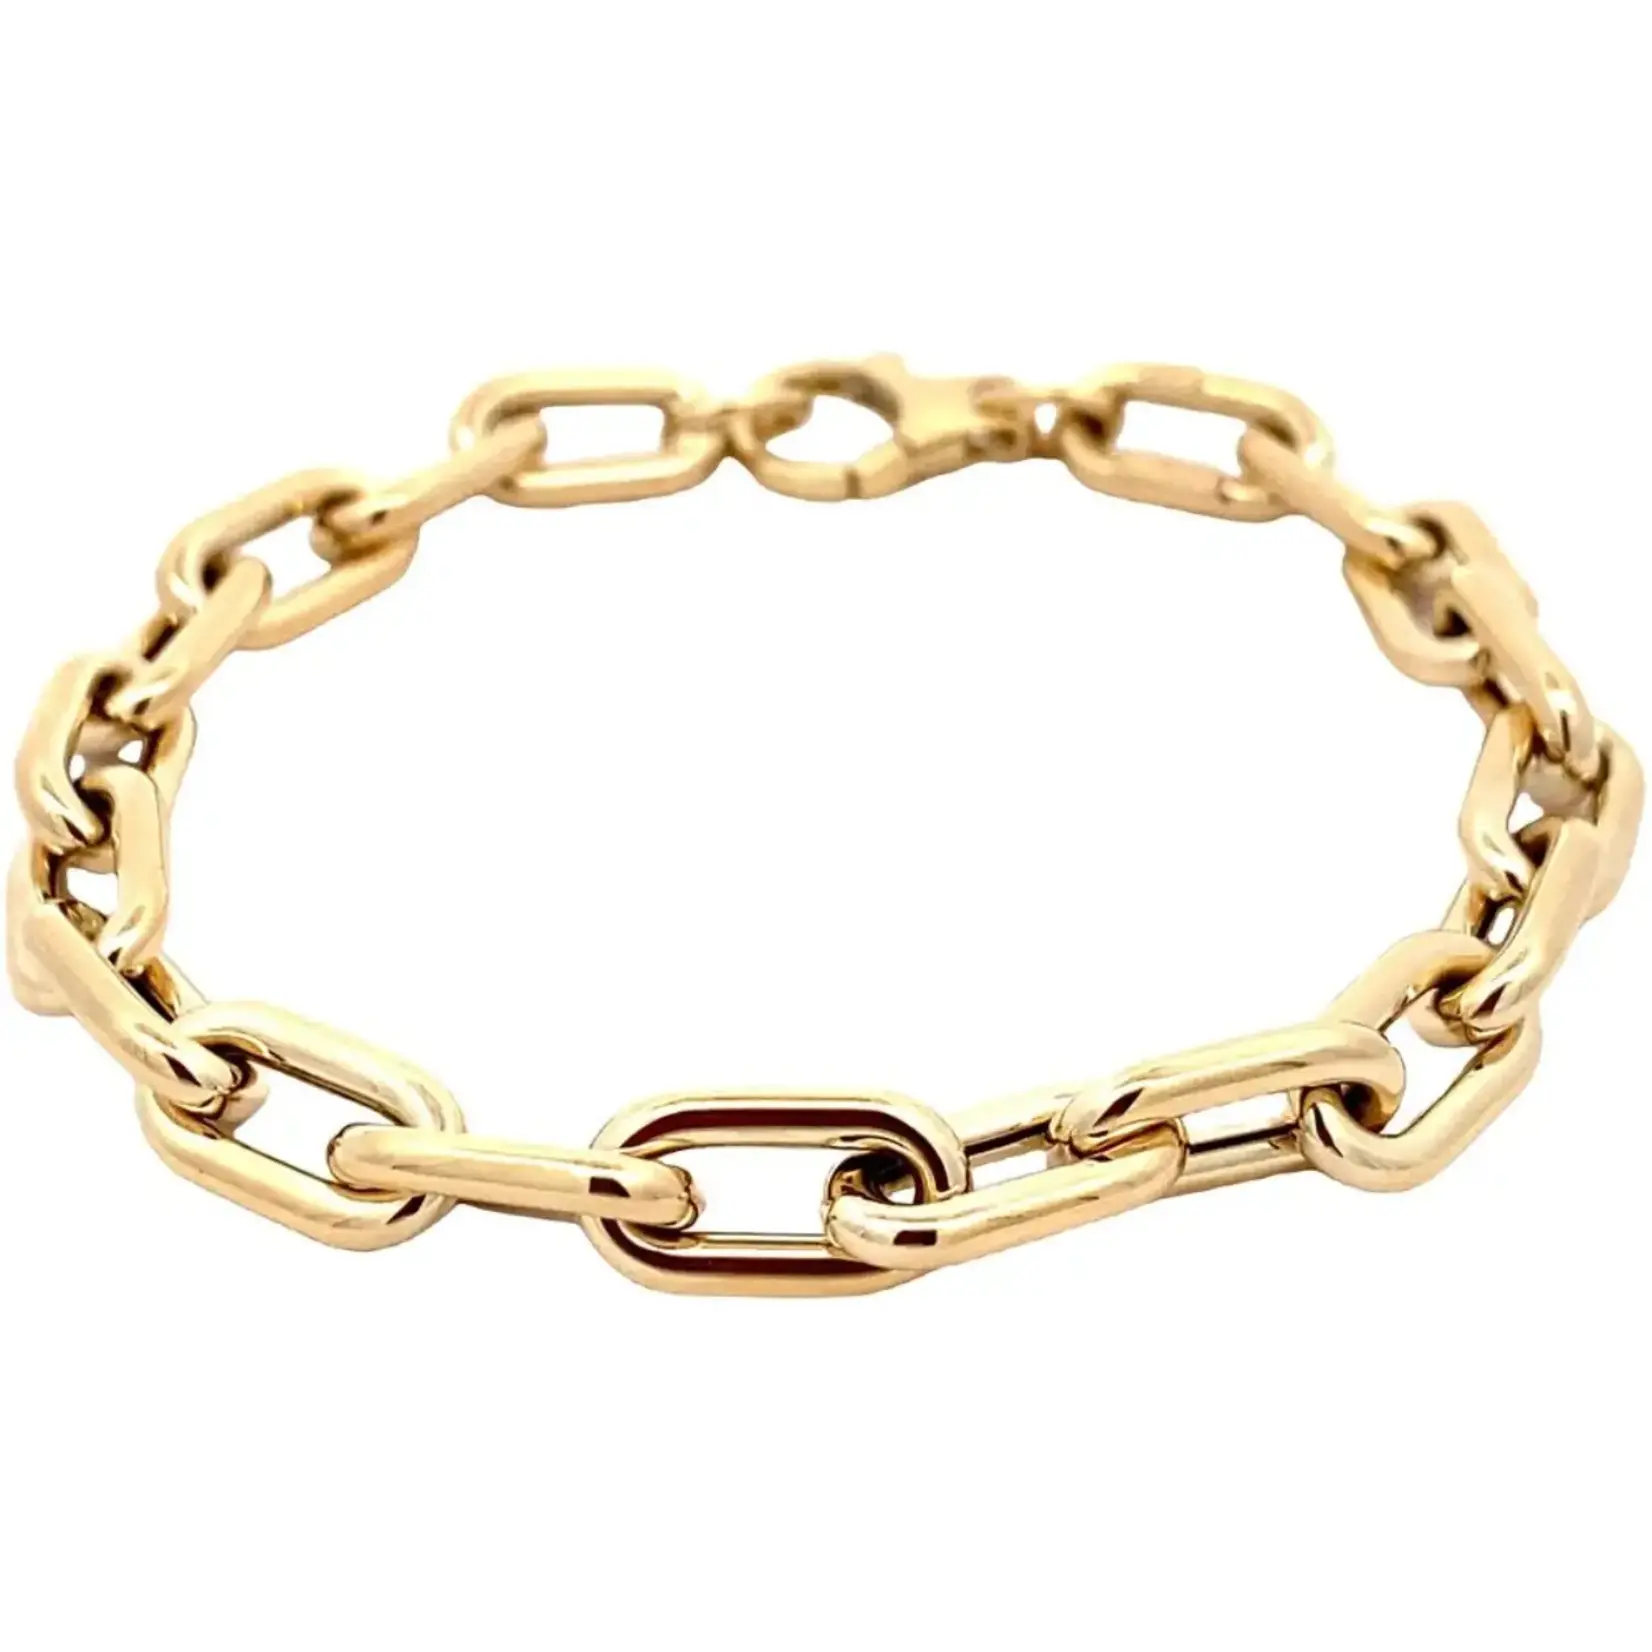 Monzario Monzario bracelet oval anchor bracelet 7mm yellow gold 19cm